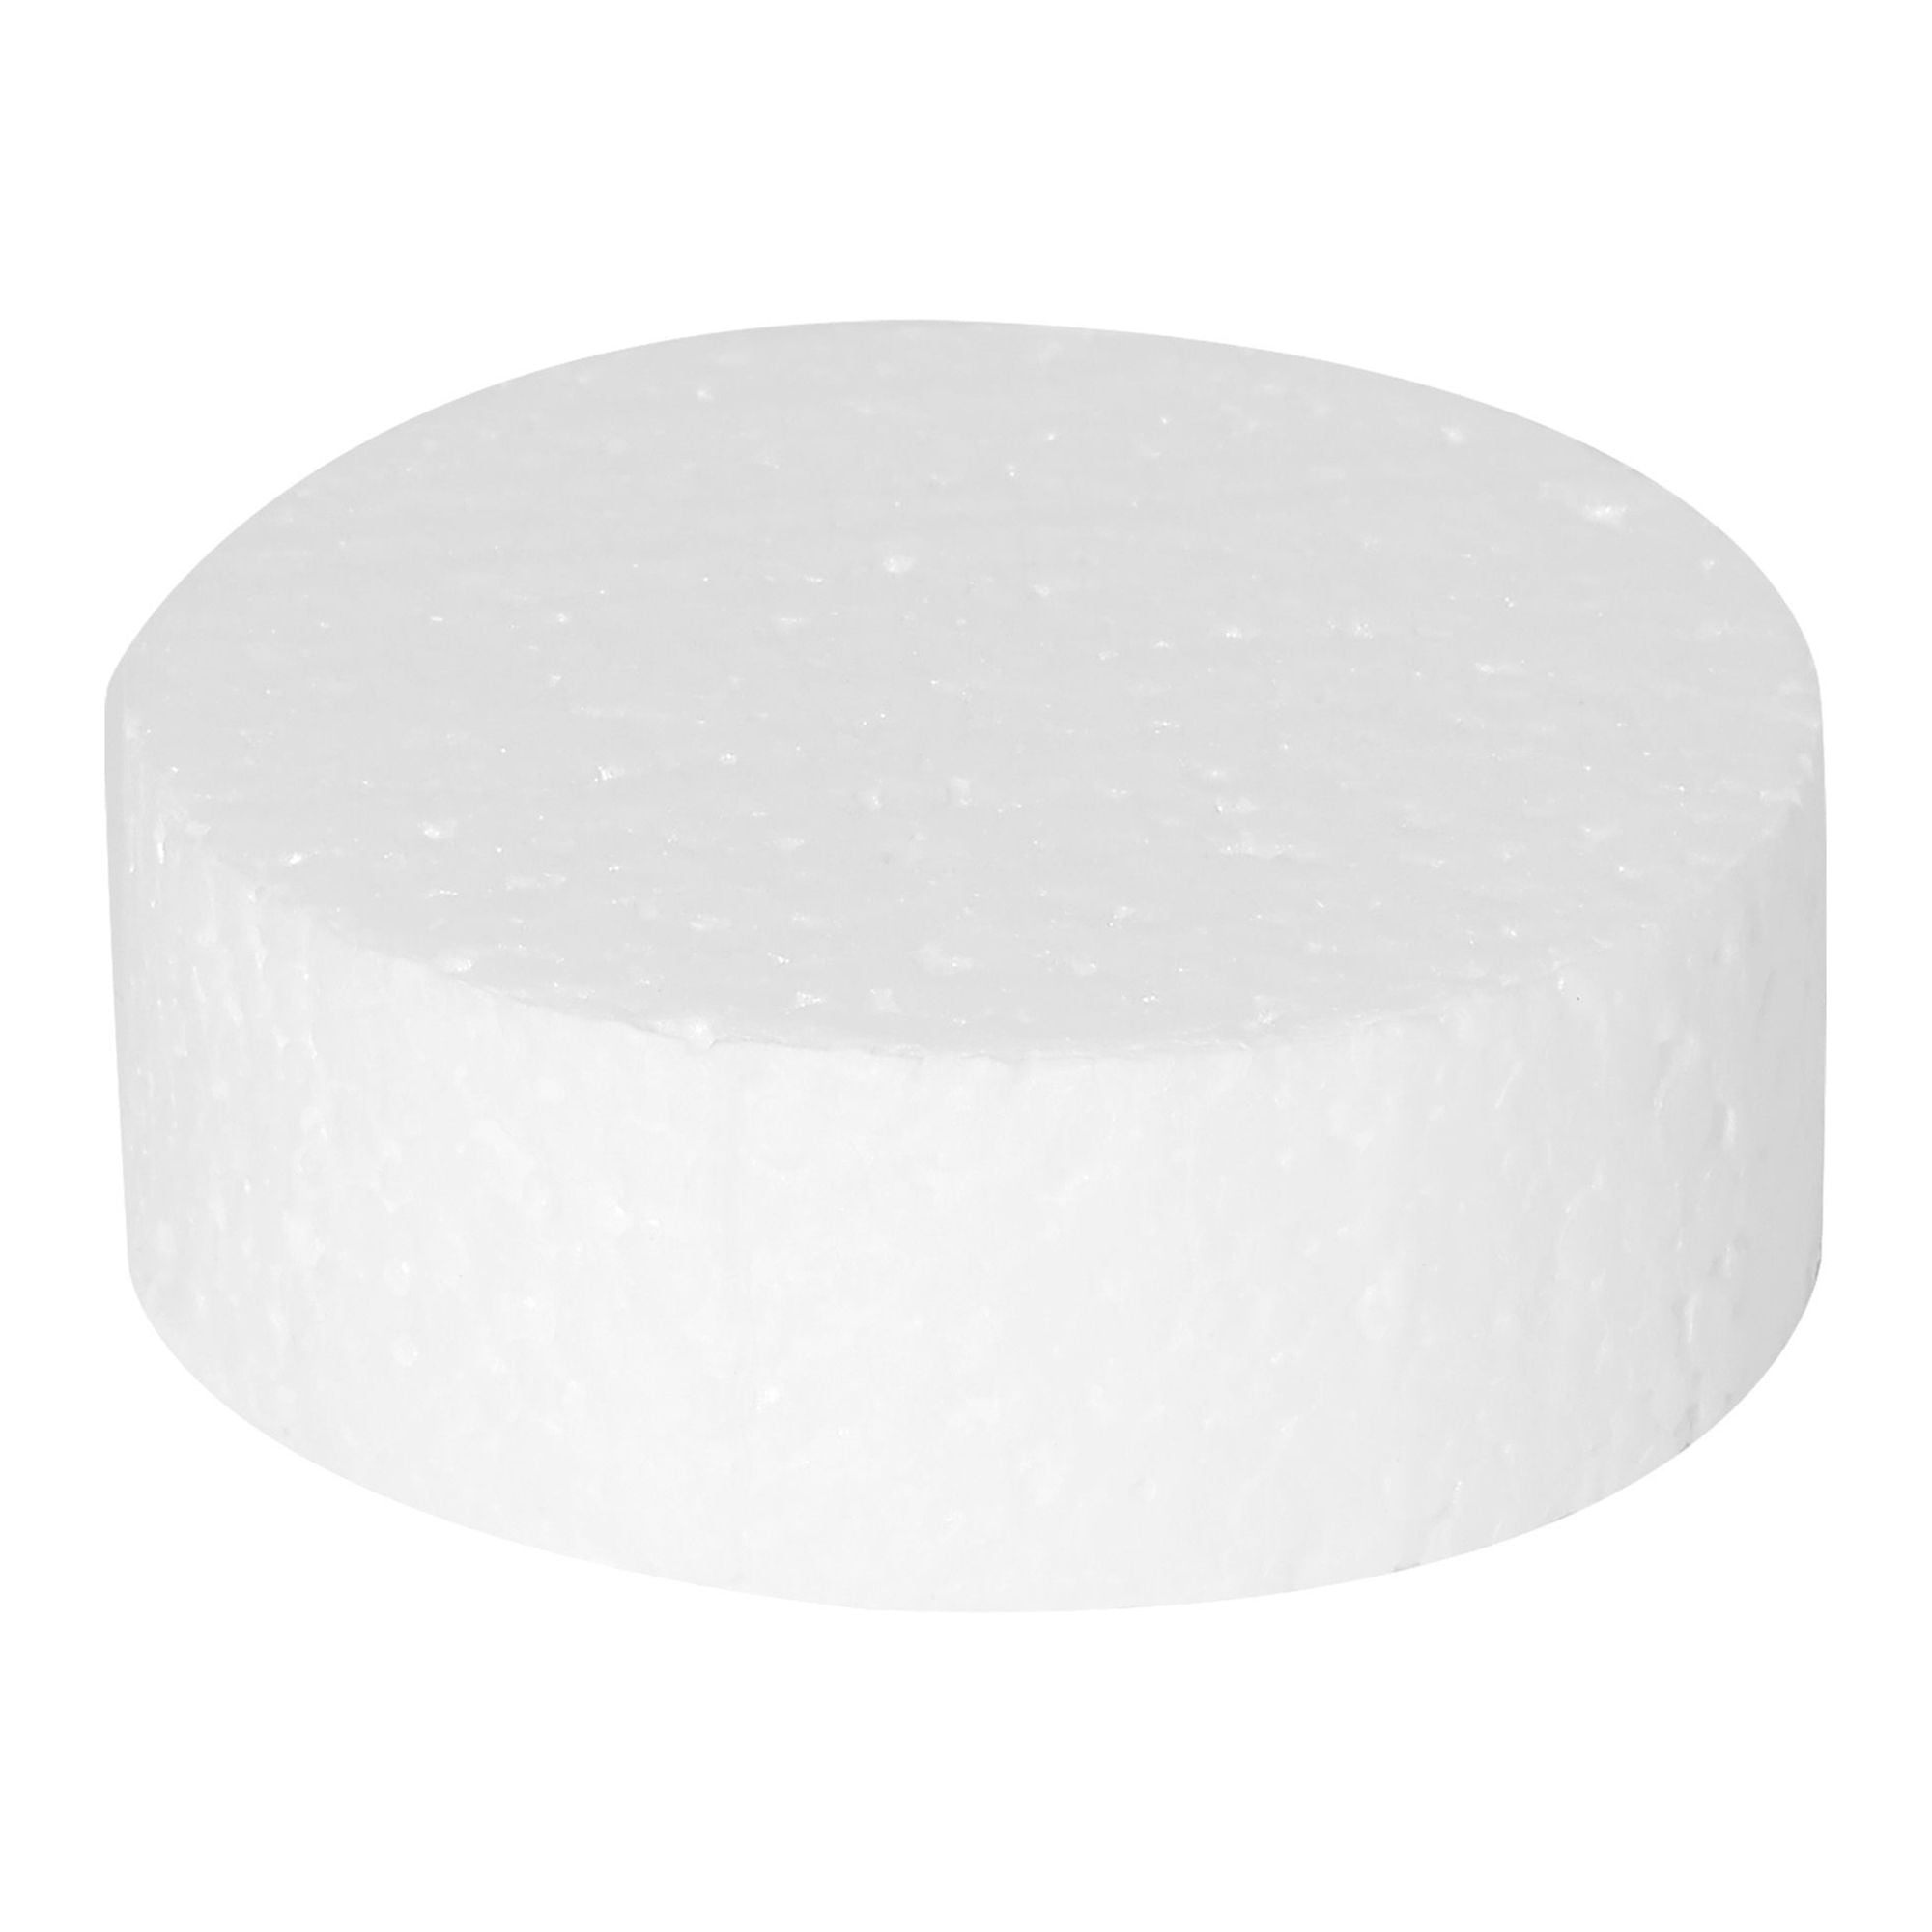 Craft Foam Circle - 3-Pack Polystyrene Foam Disc, Round Craft